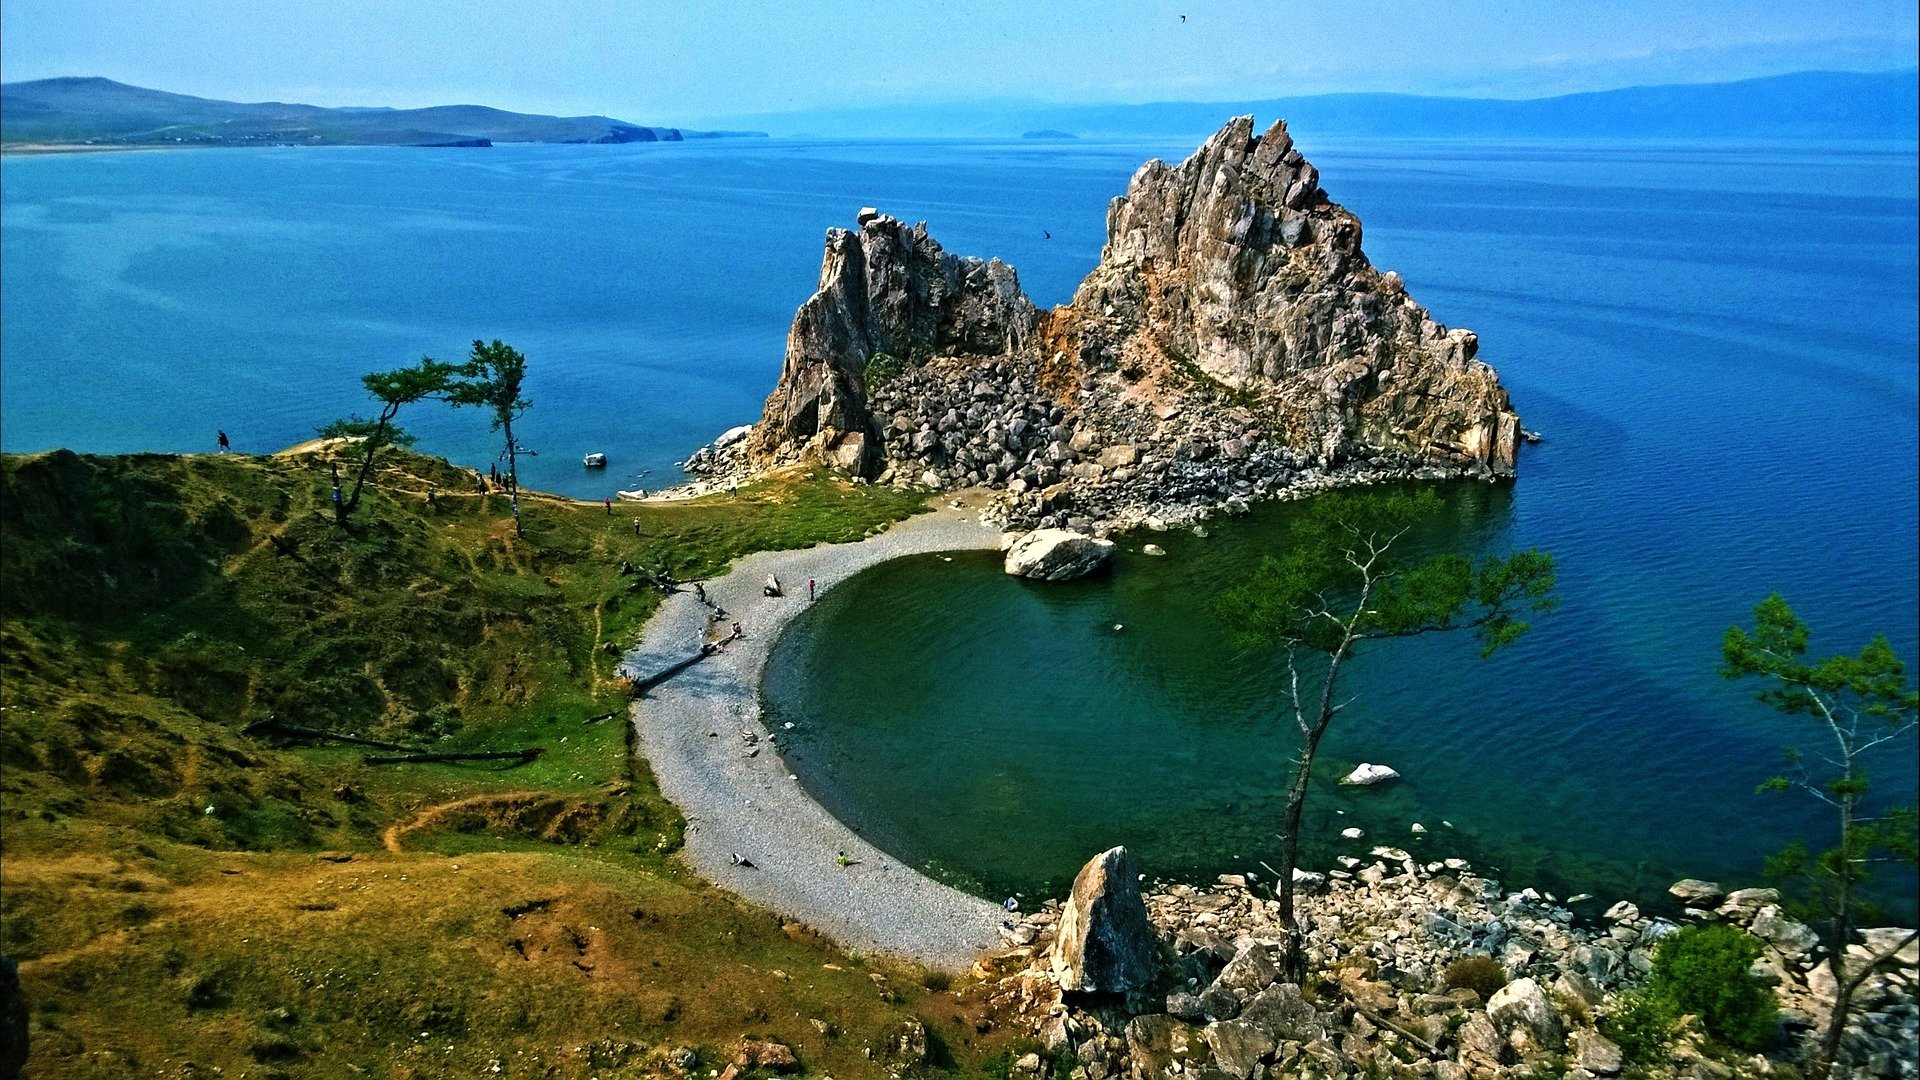 visit lake baikal the largest